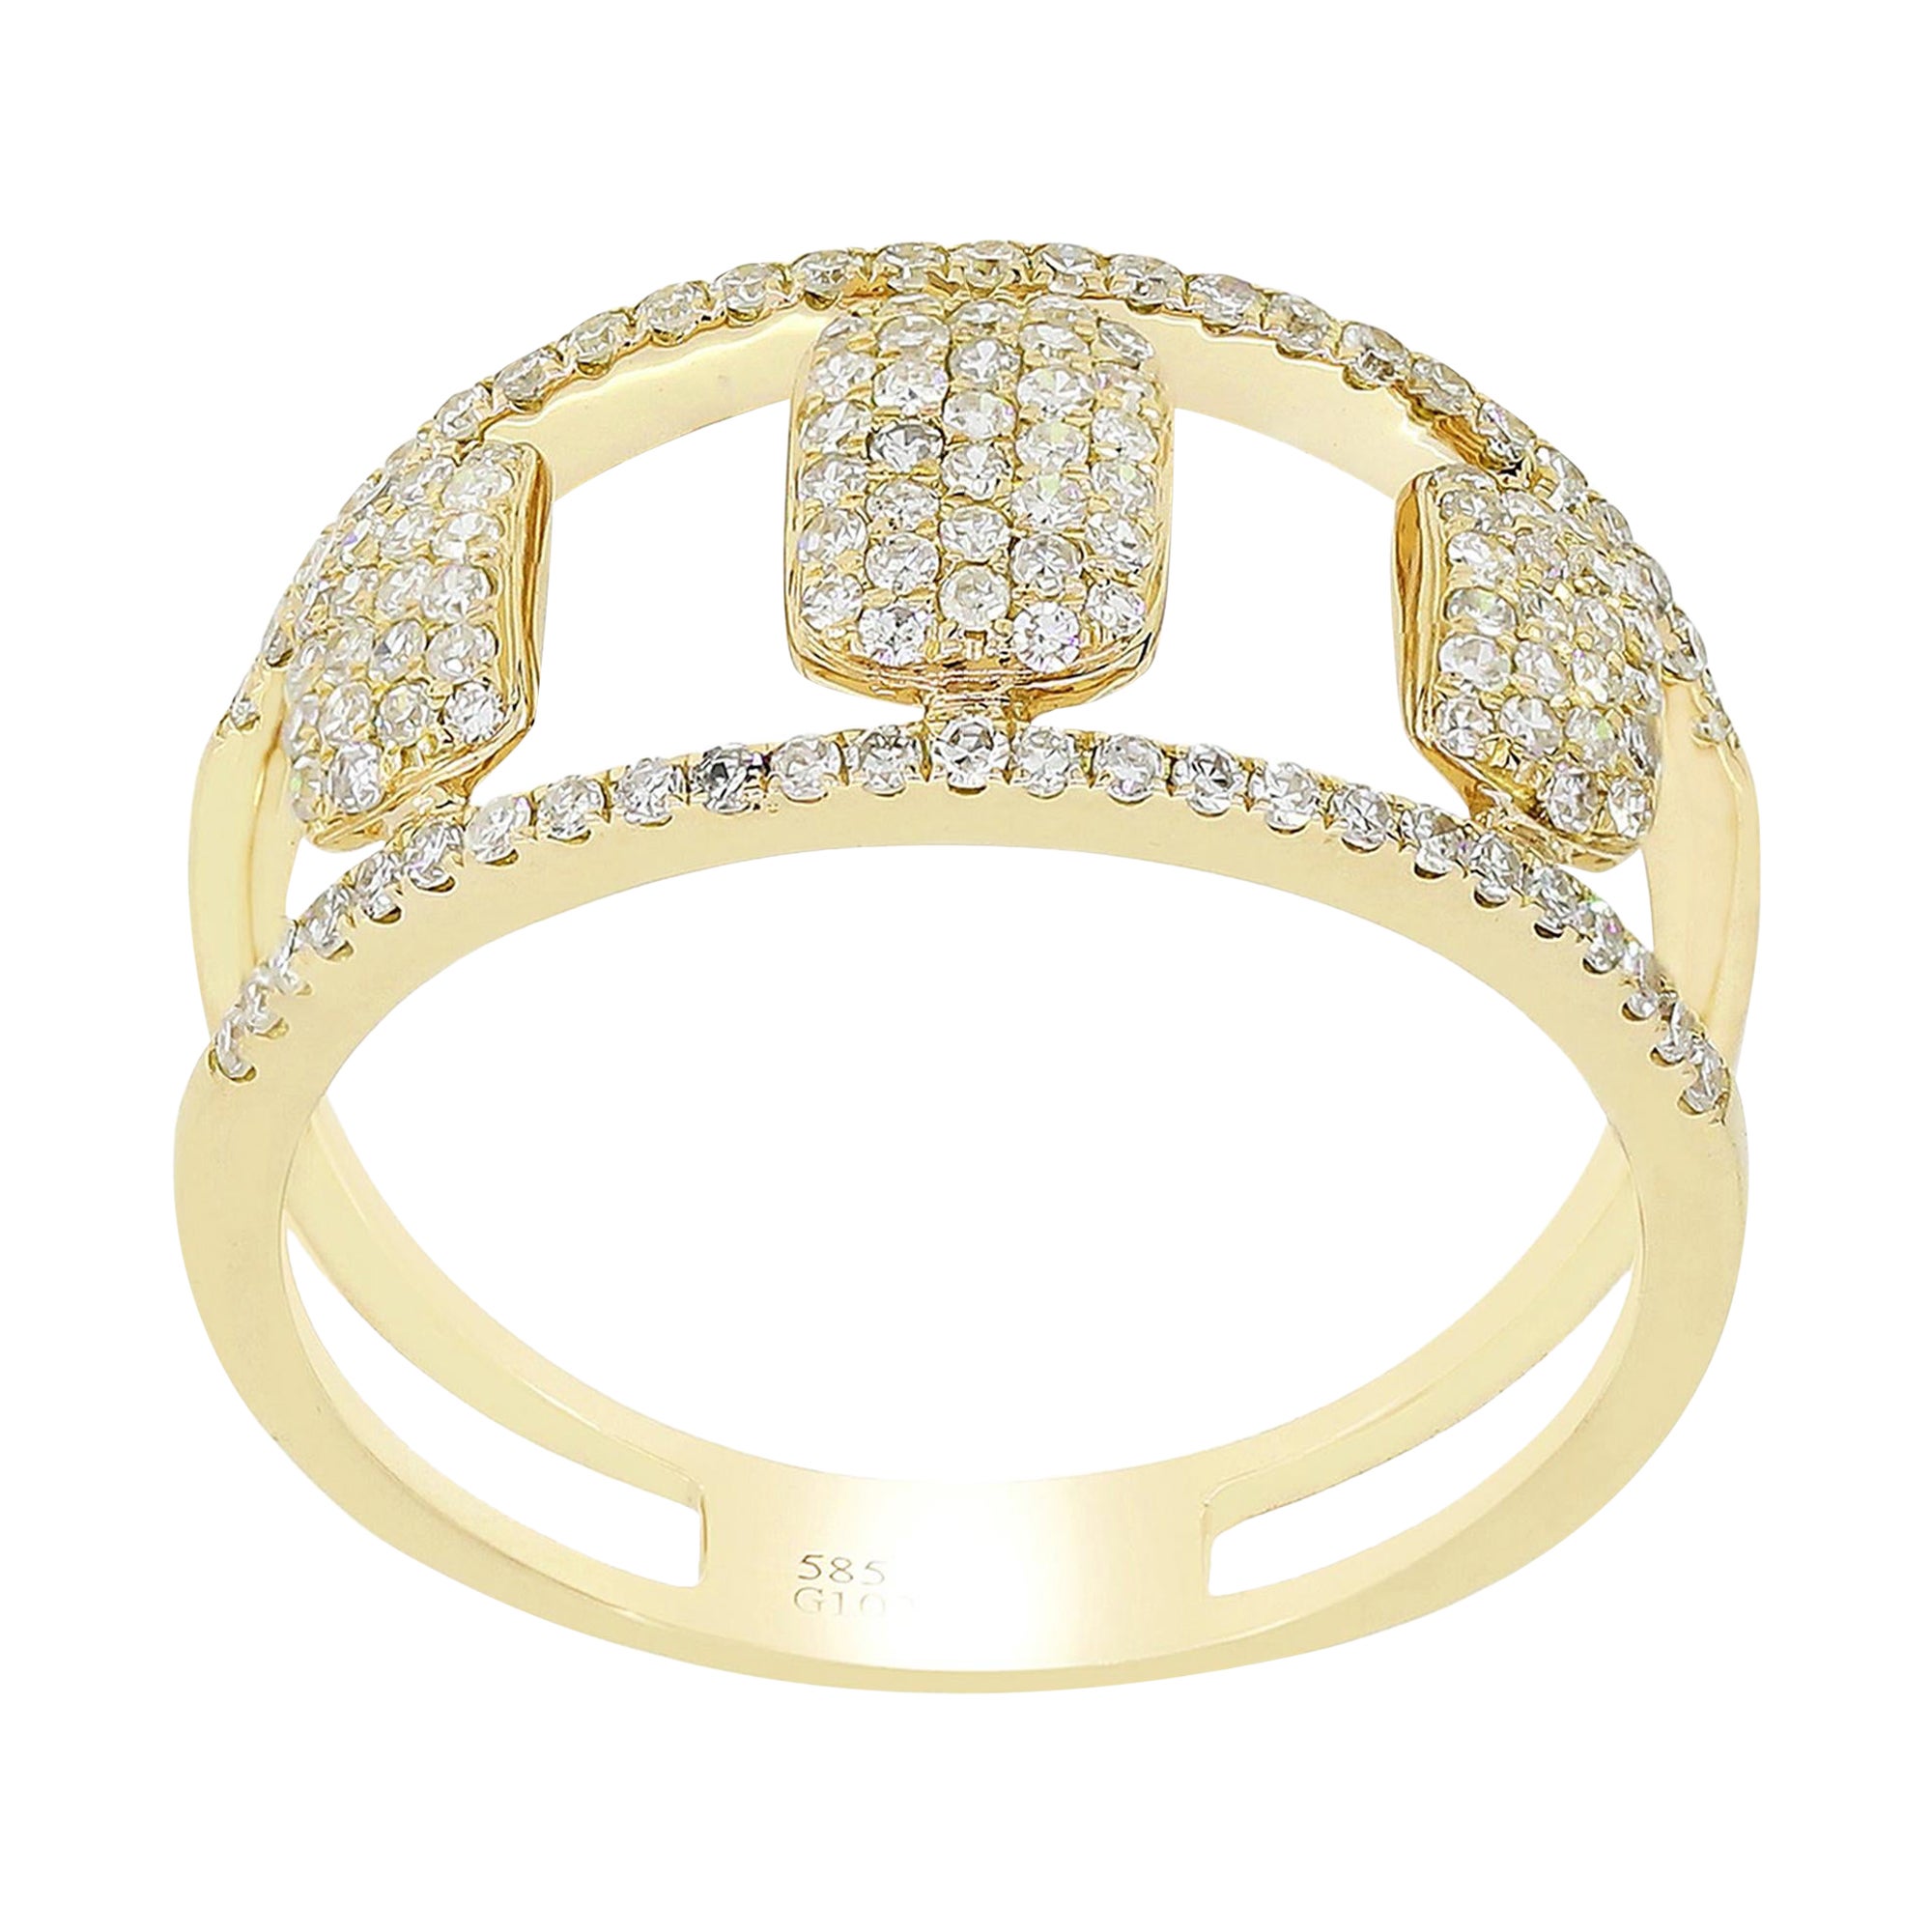 Luxle 0.40 Cttw. Round Pave Diamond Wedding Ring in 14K Yellow Gold